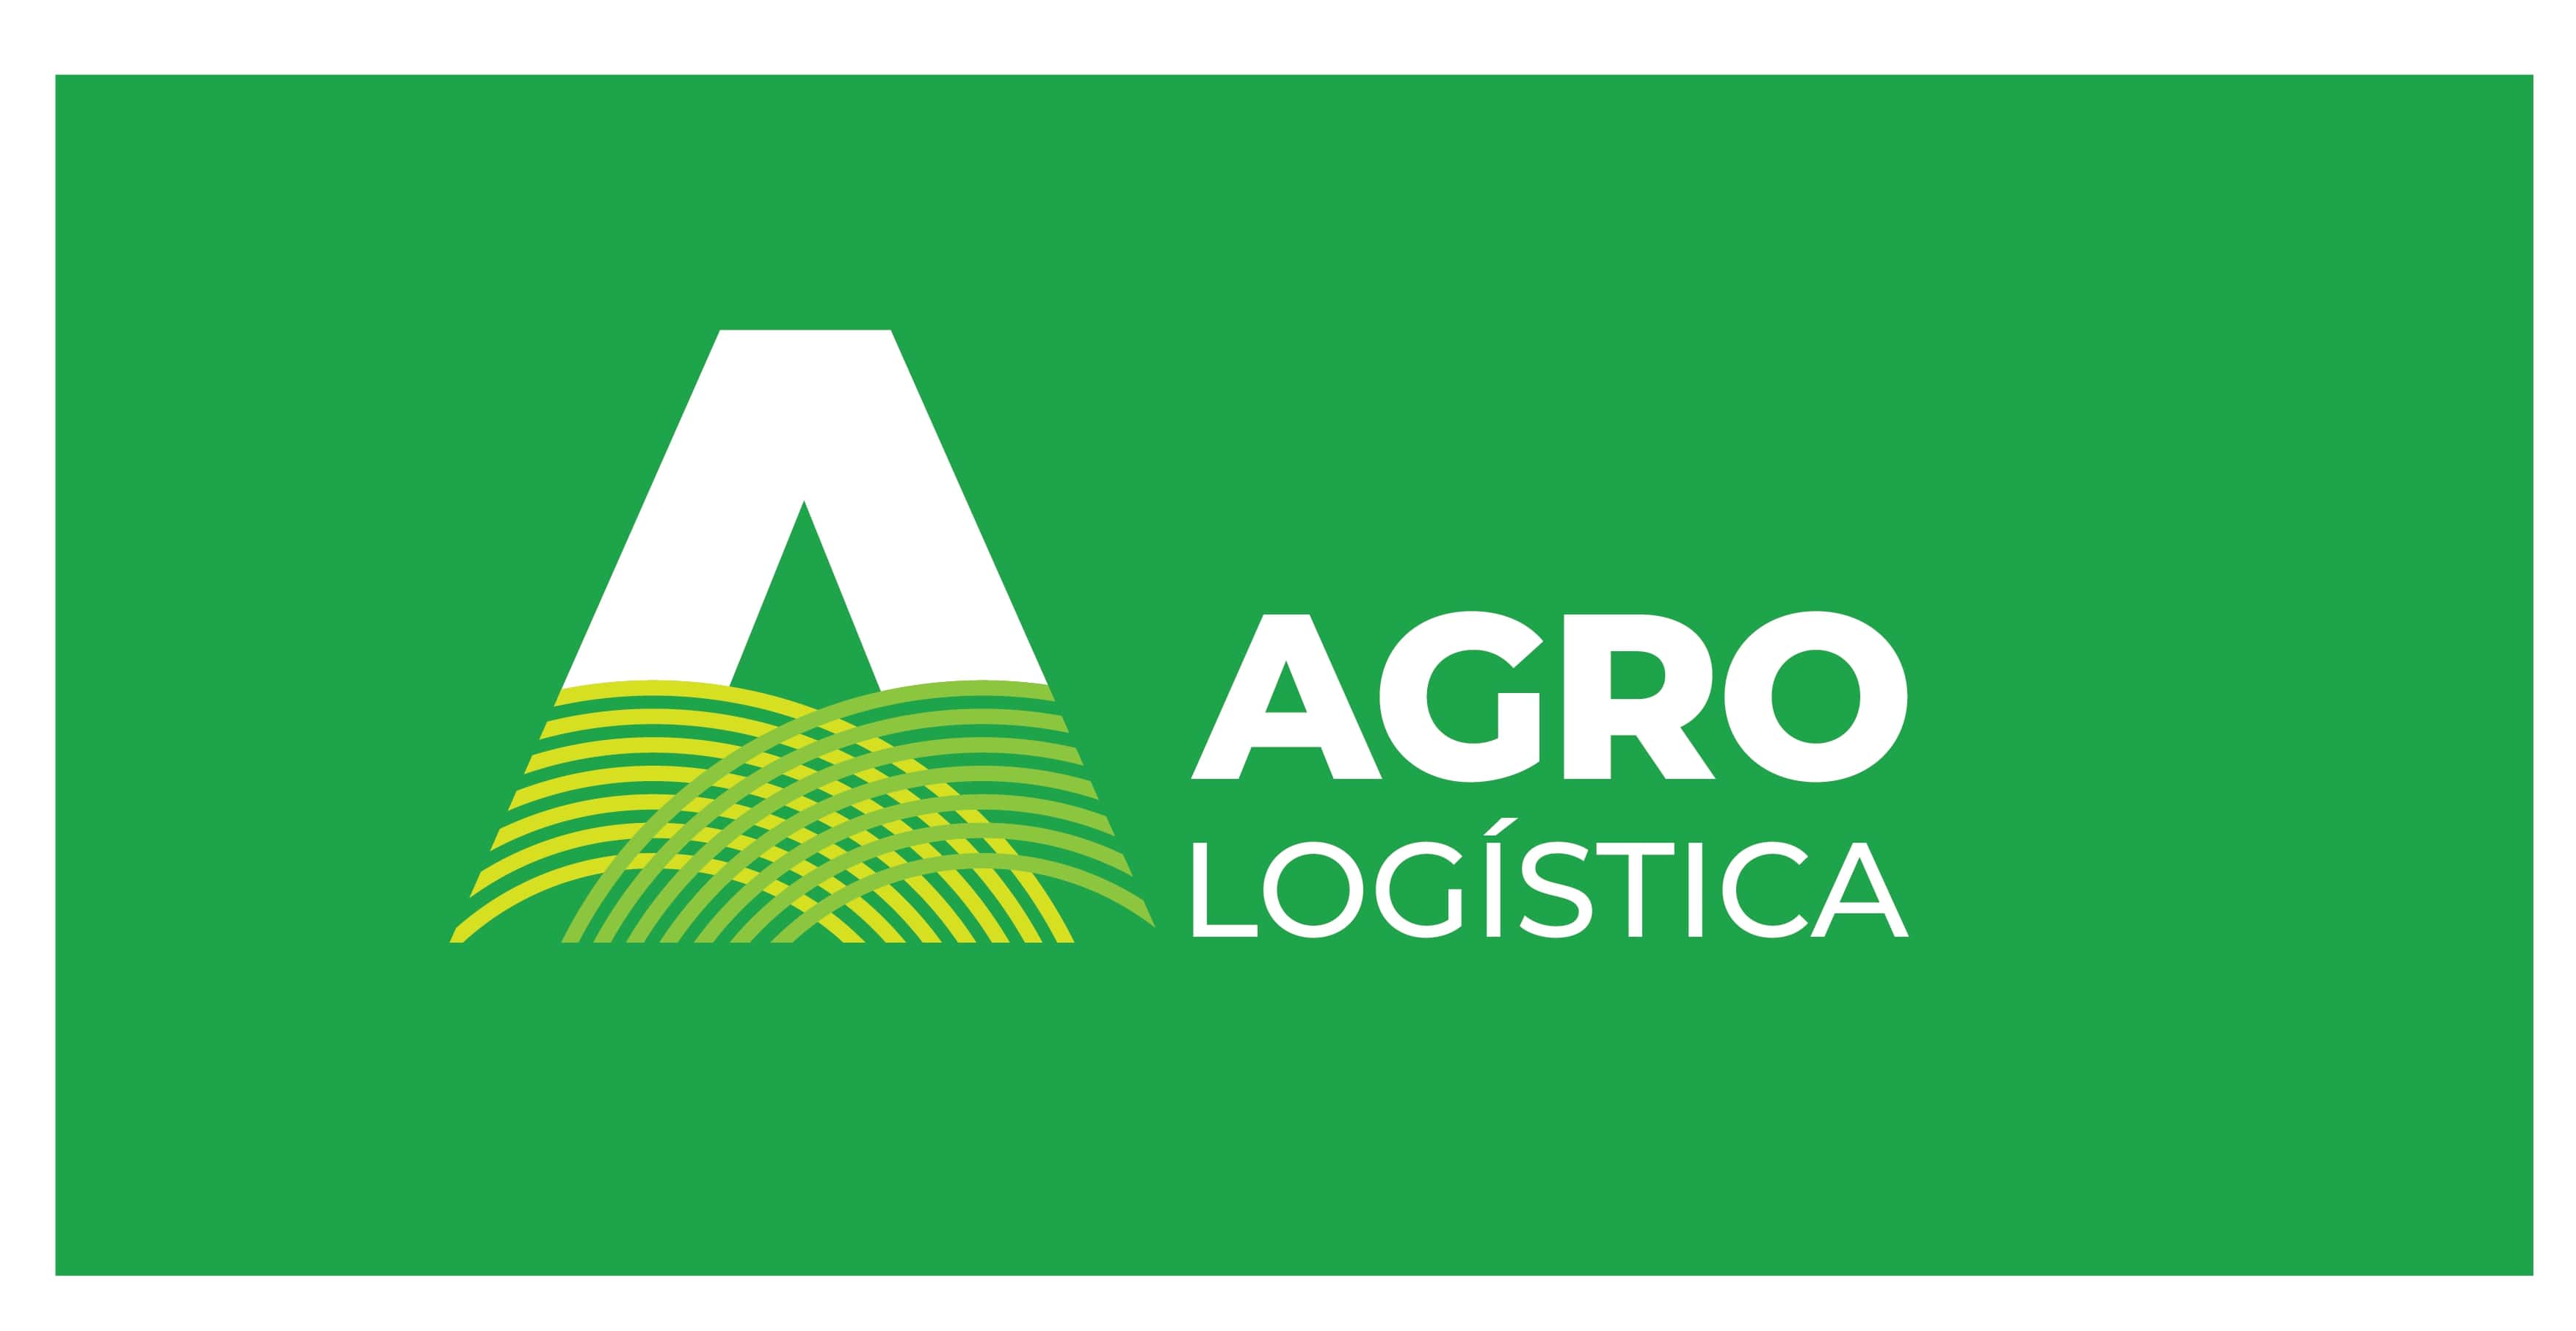 Agro-Logistica